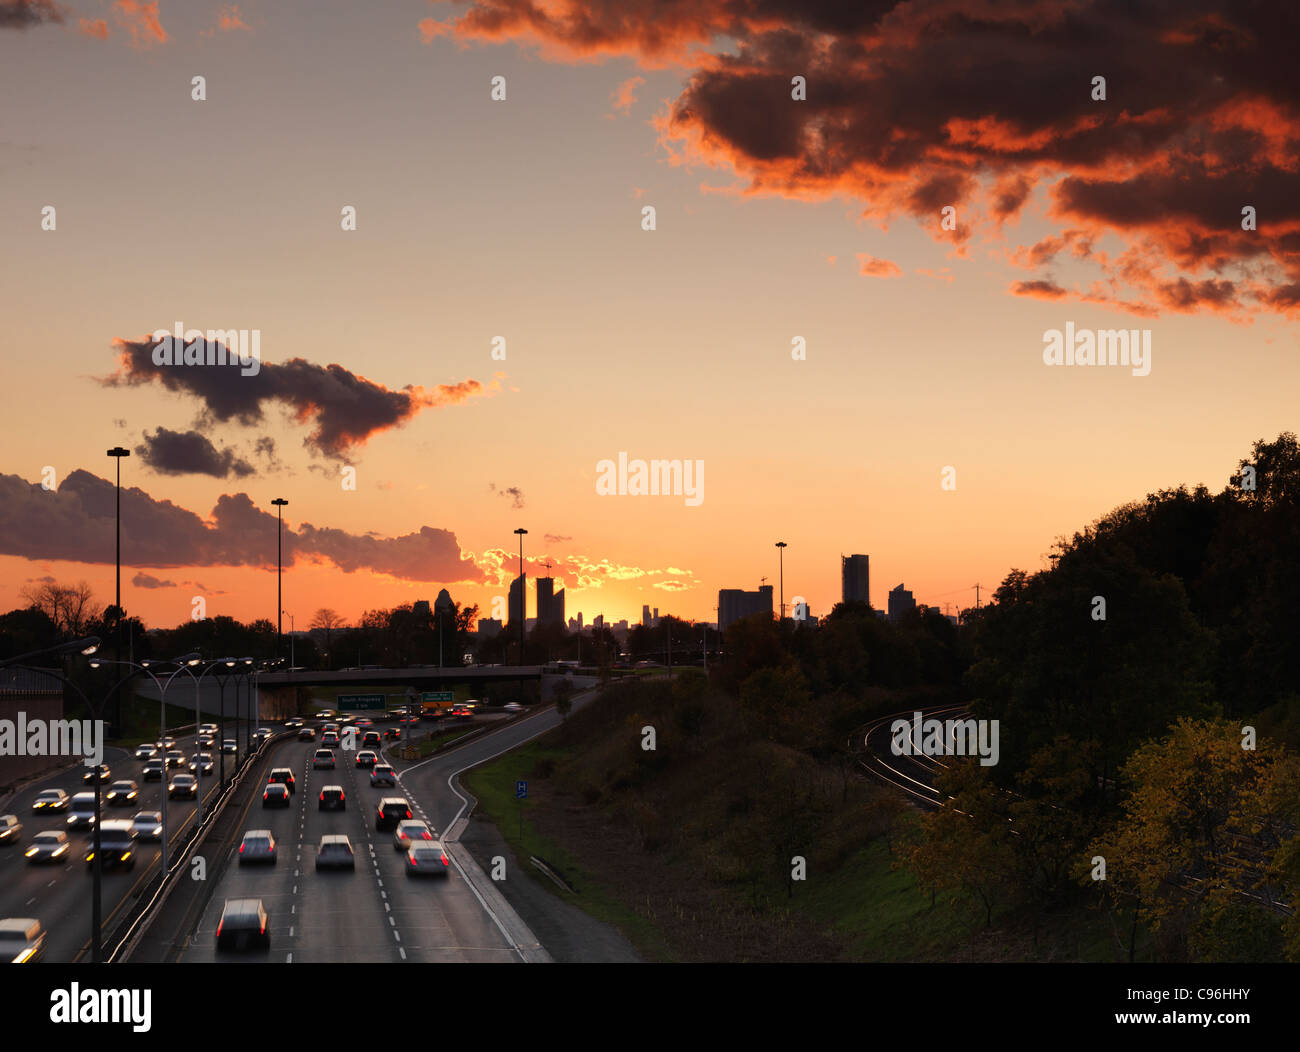 Sunset scenery of commute traffic at the Gardiner Expressway in Toronto, Ontario, Canada. Stock Photo